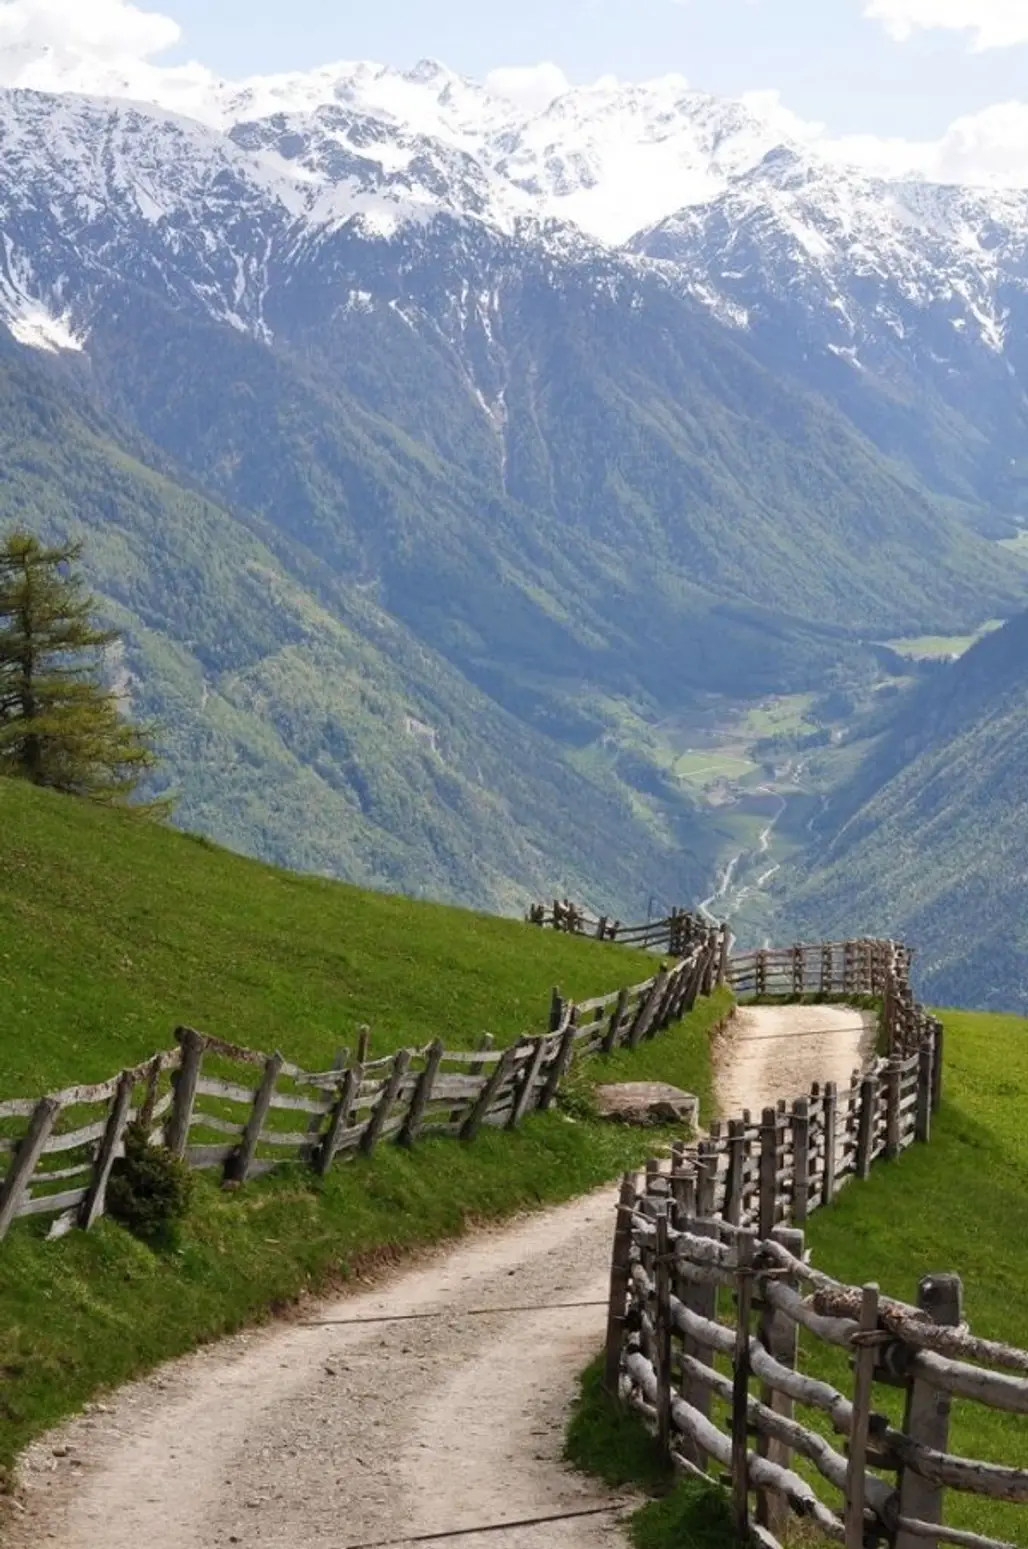 The Alps, Italy